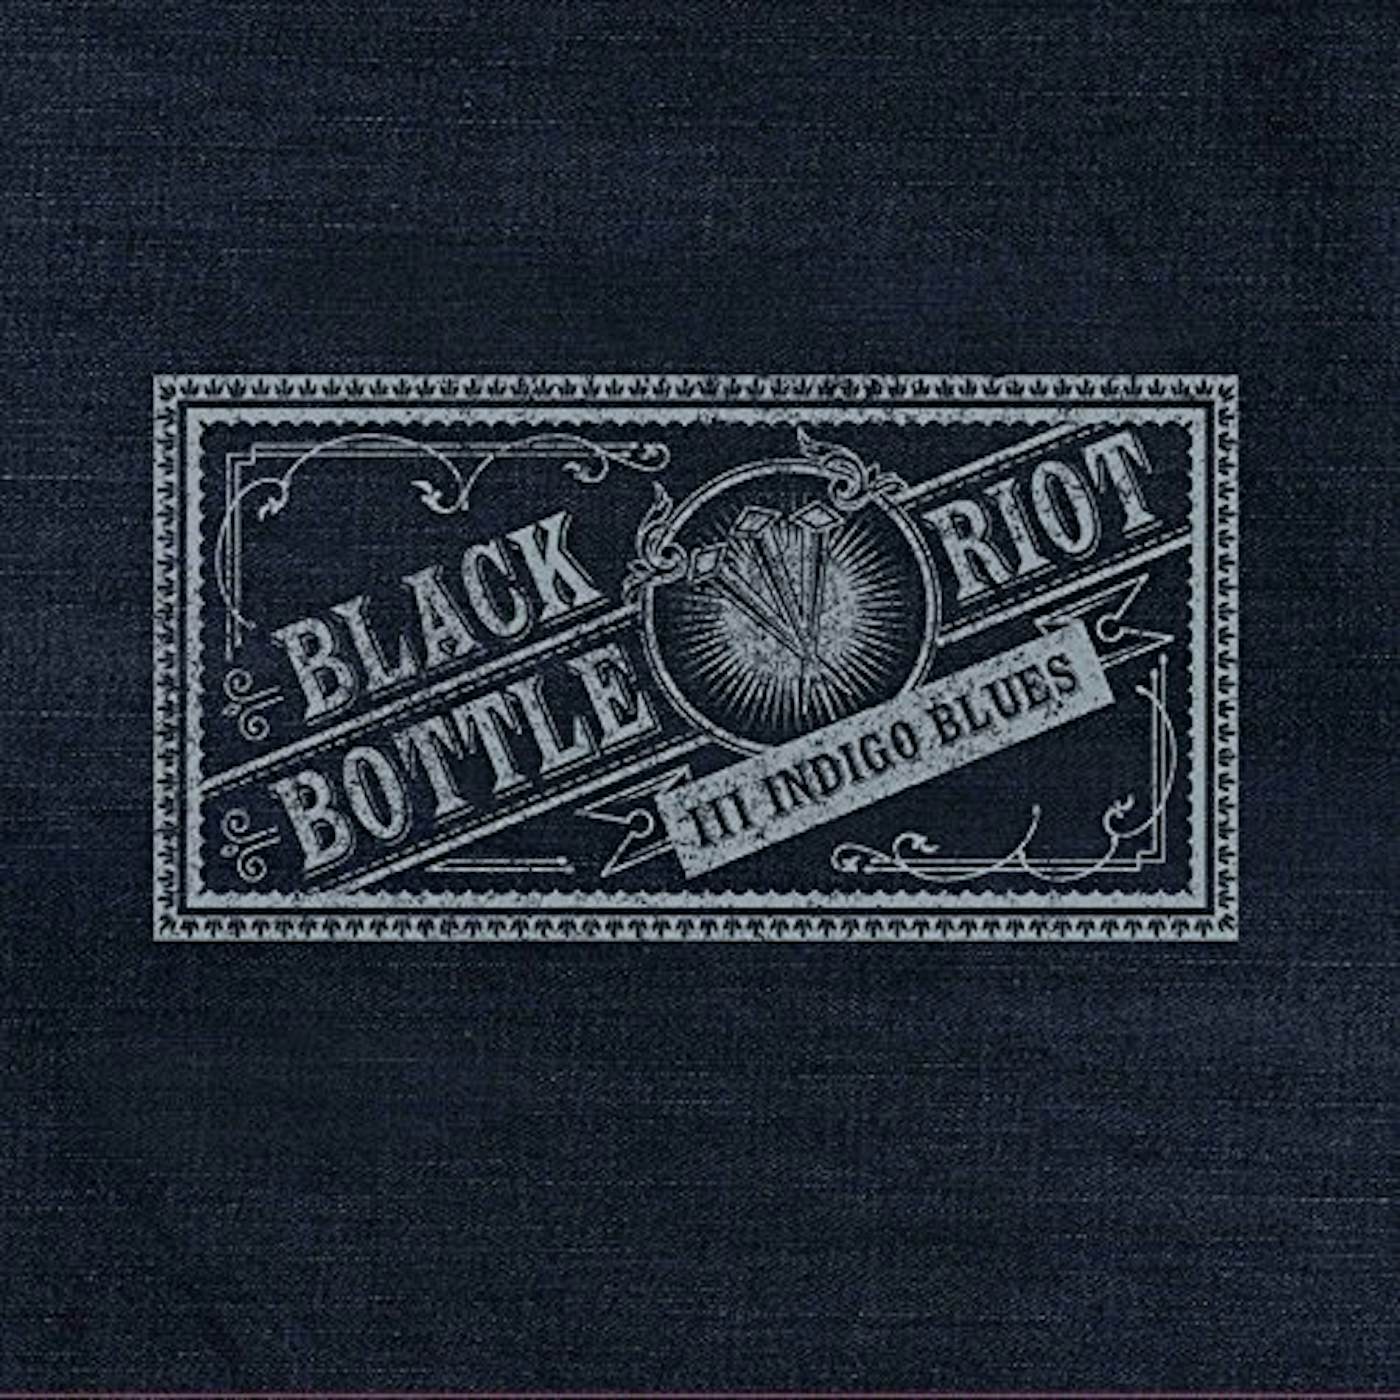 Black Bottle Riot III INDIGO BLUES Vinyl Record